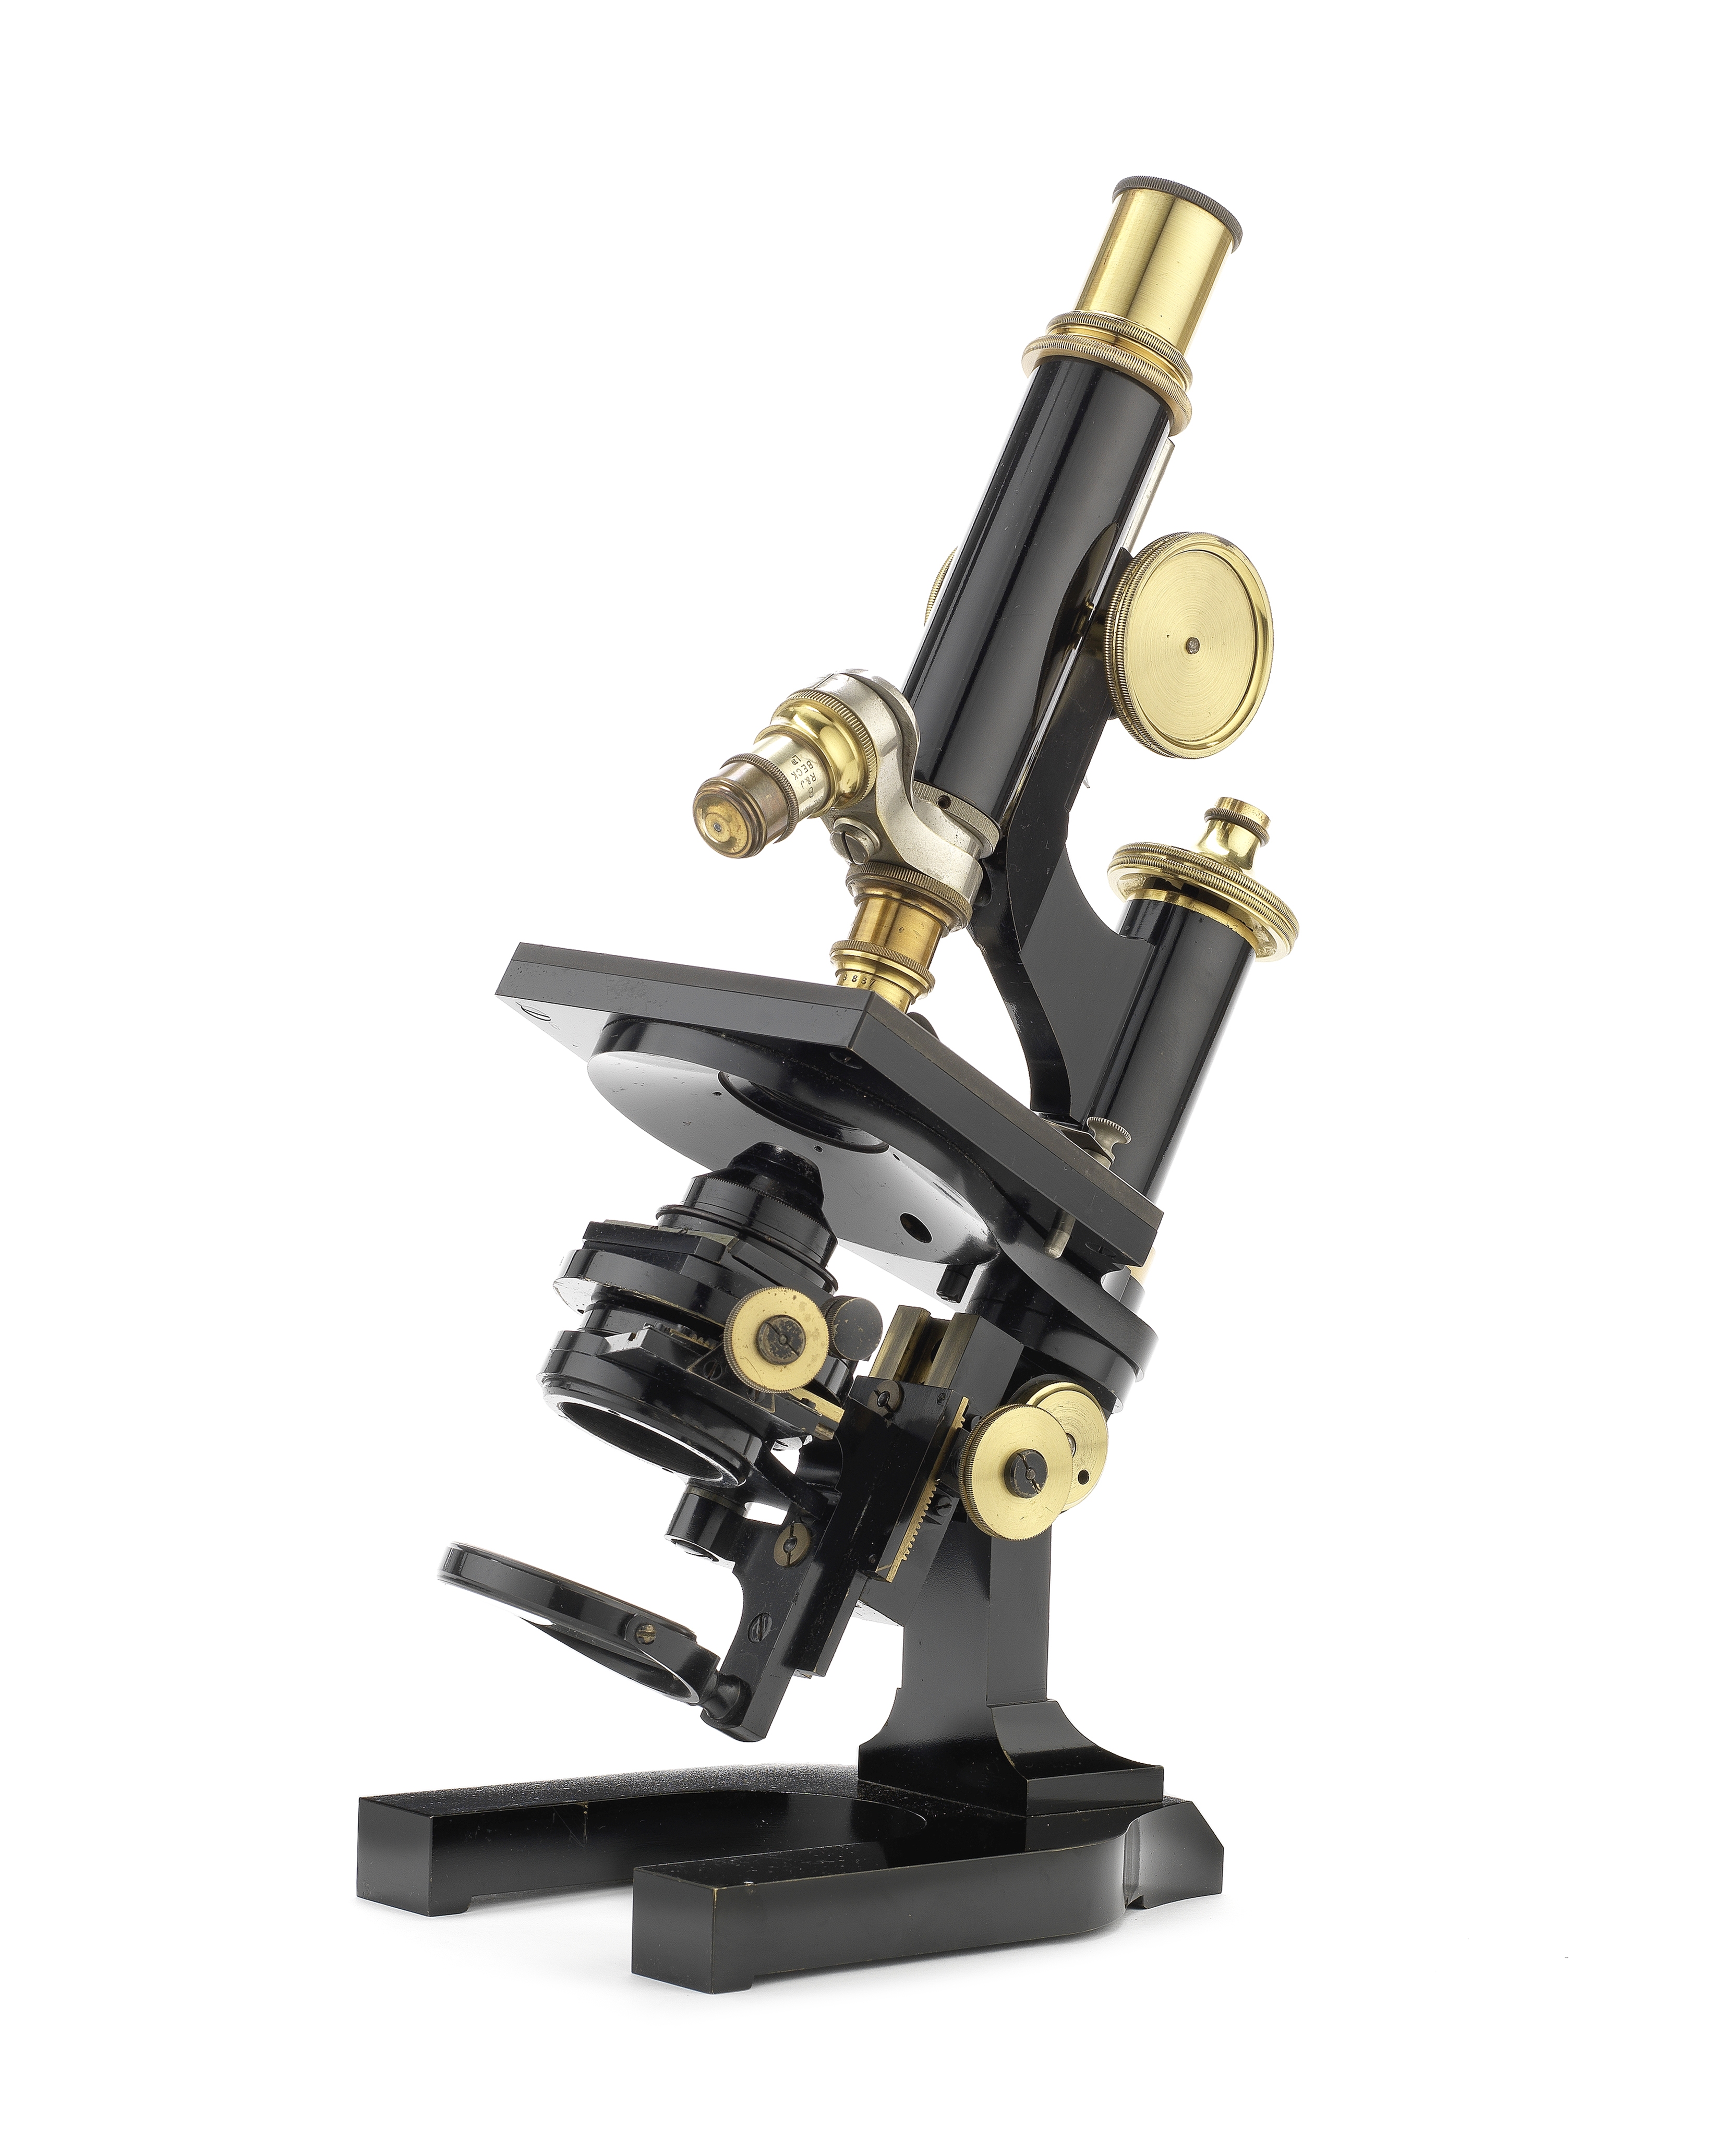 A Leitz microscope, German, 1930's,